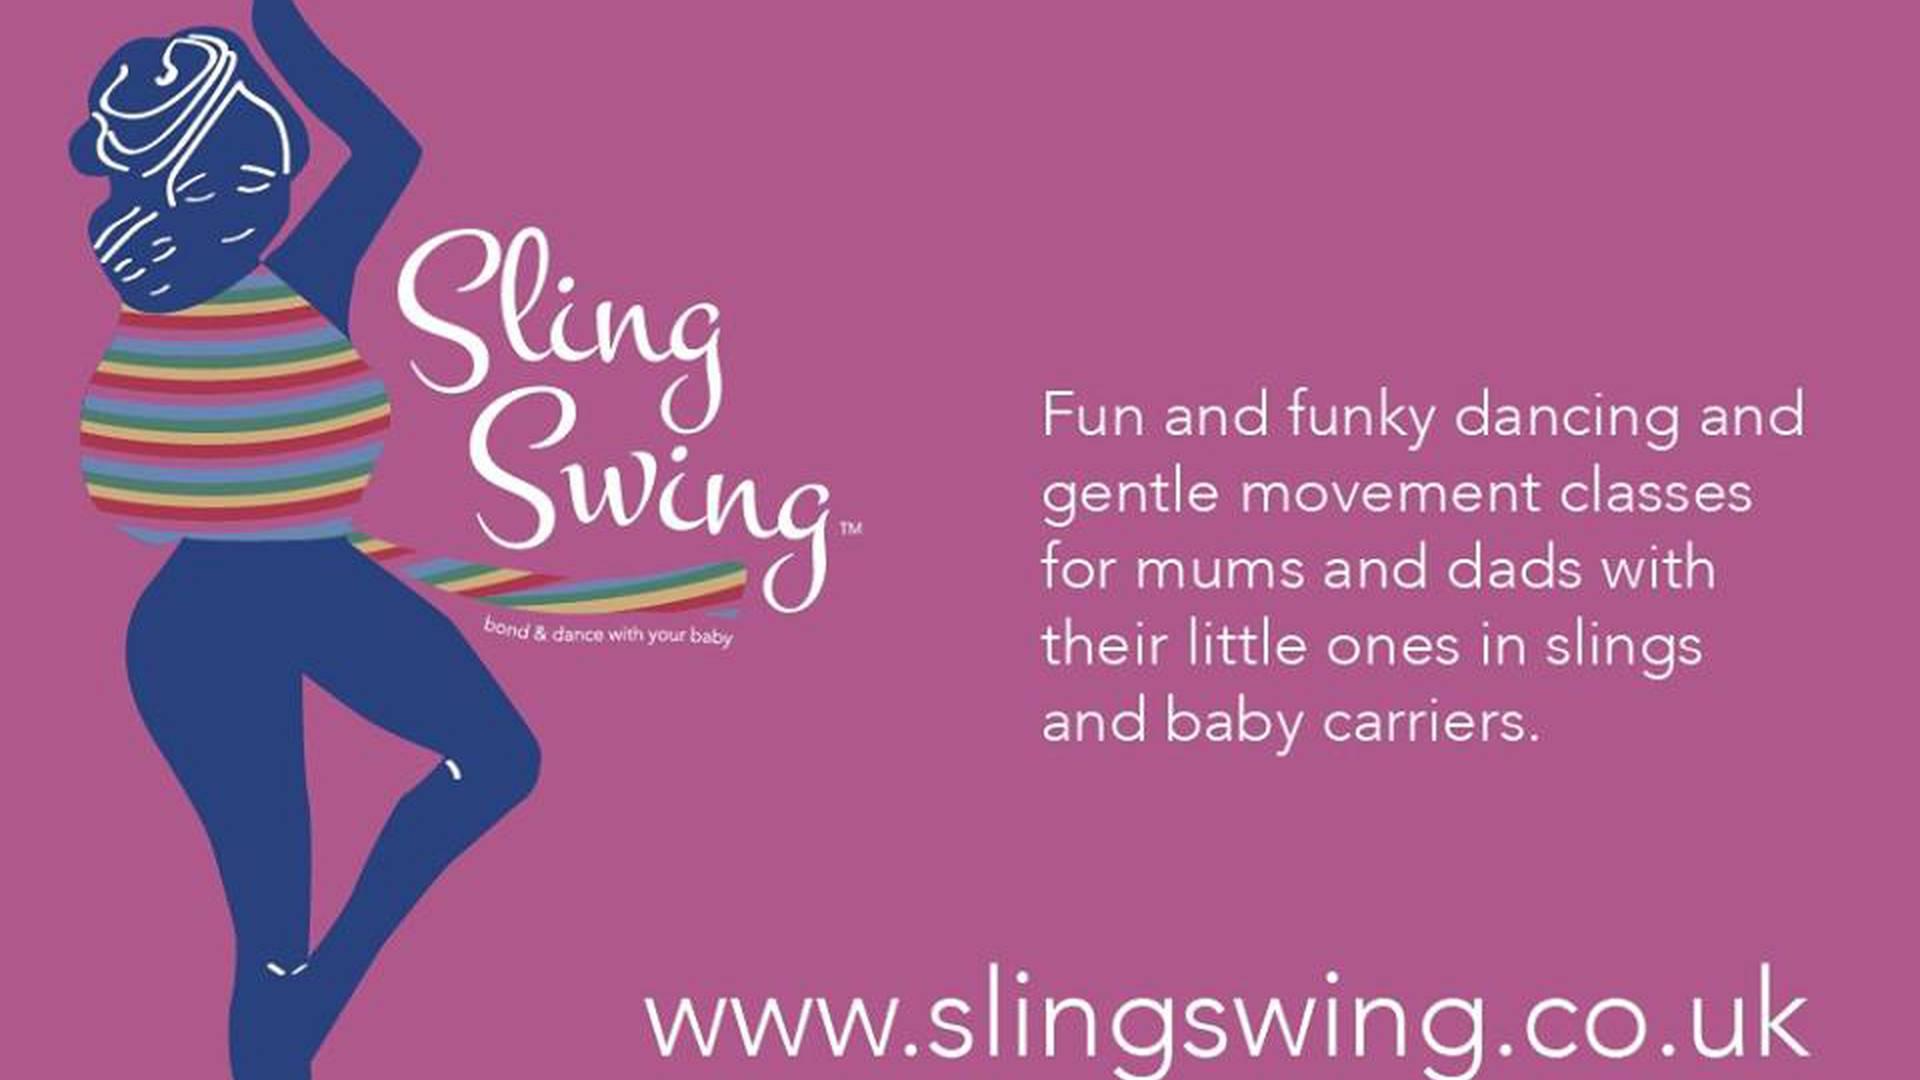 Sling Swing photo